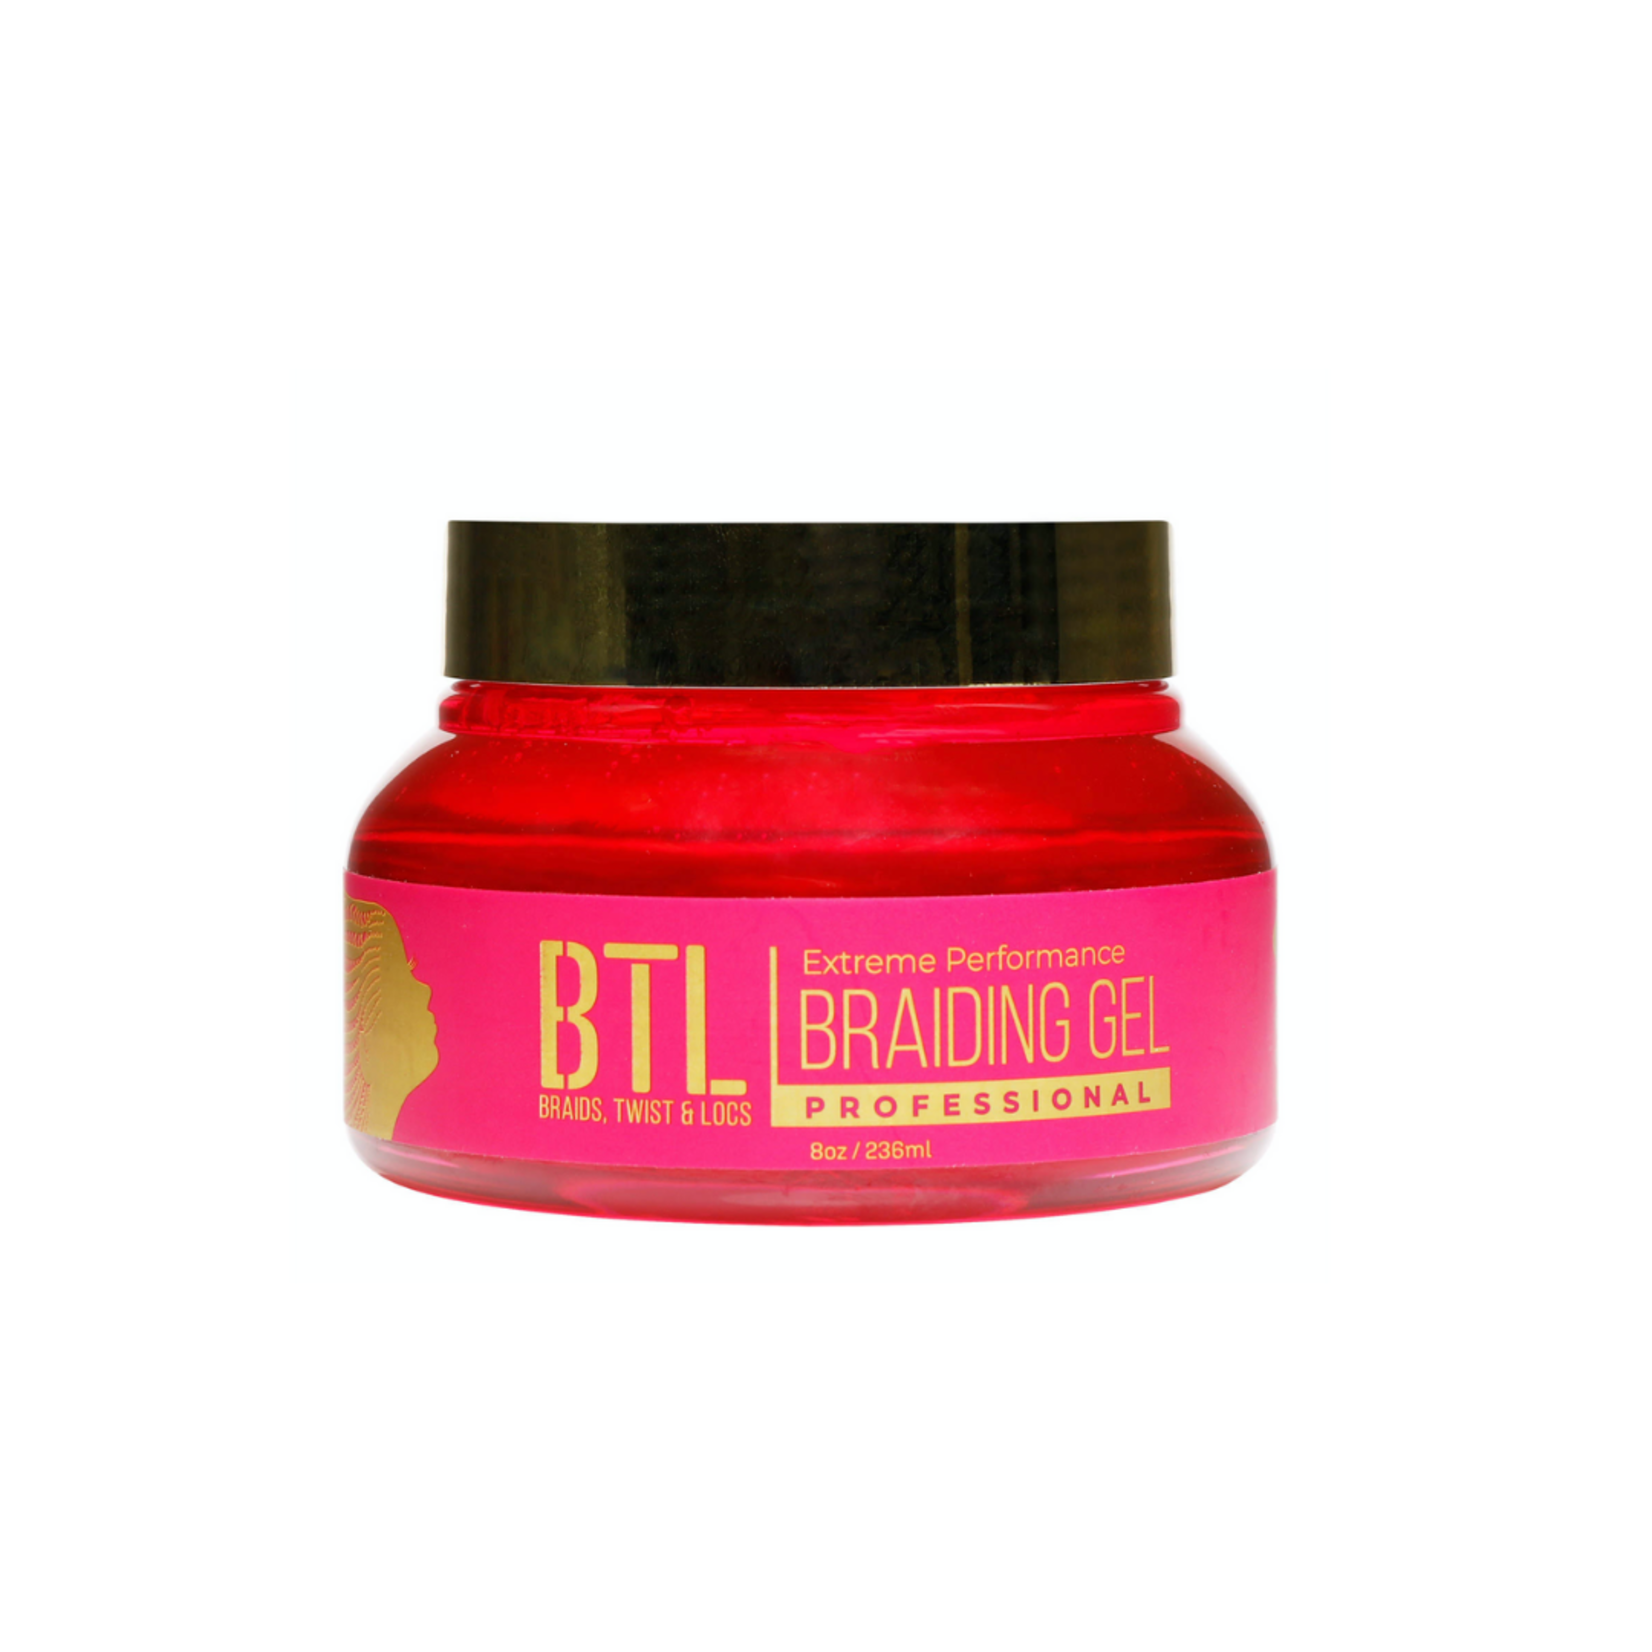 BTL Professional Braiding Gel Extreme Performance 8 oz